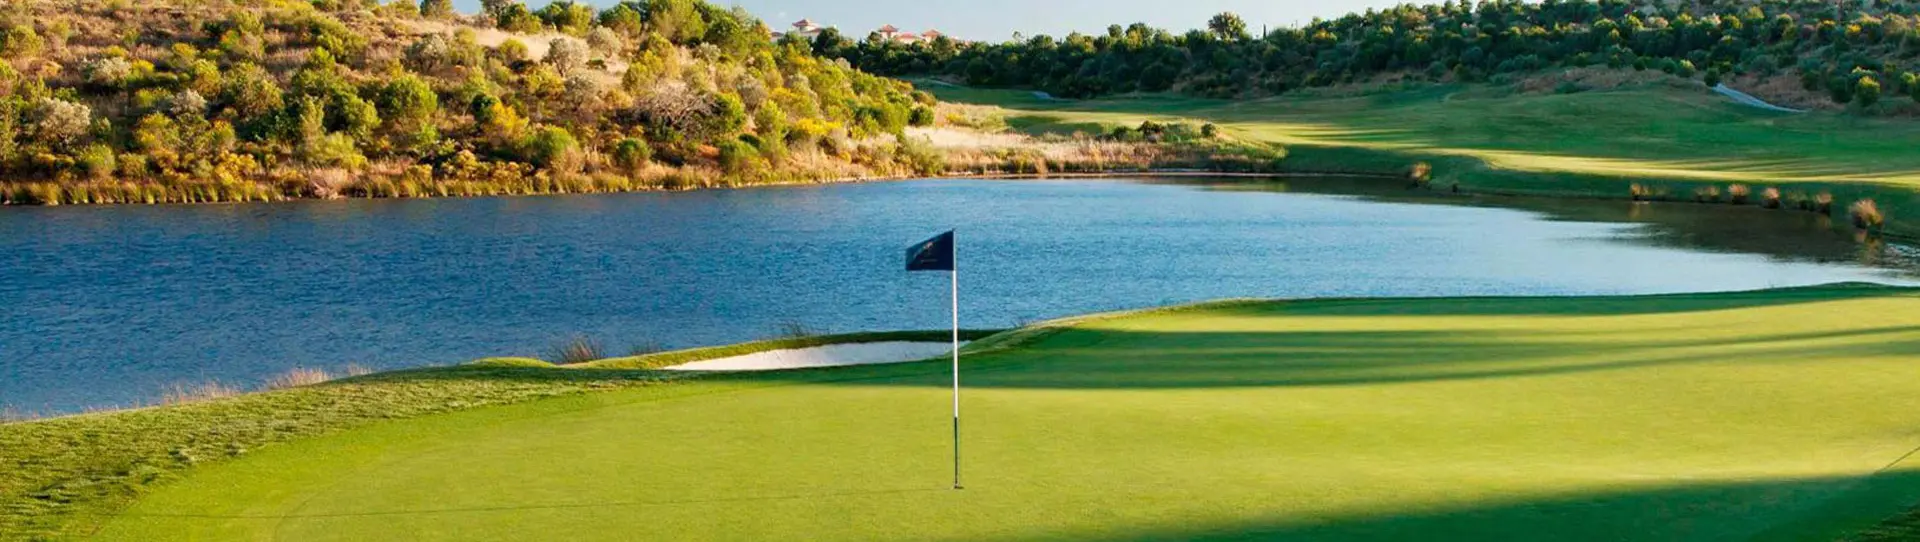 Portugal Golf Driving Range - Castro Marim Golfe & Country Club Driving Ranges - Photo 1